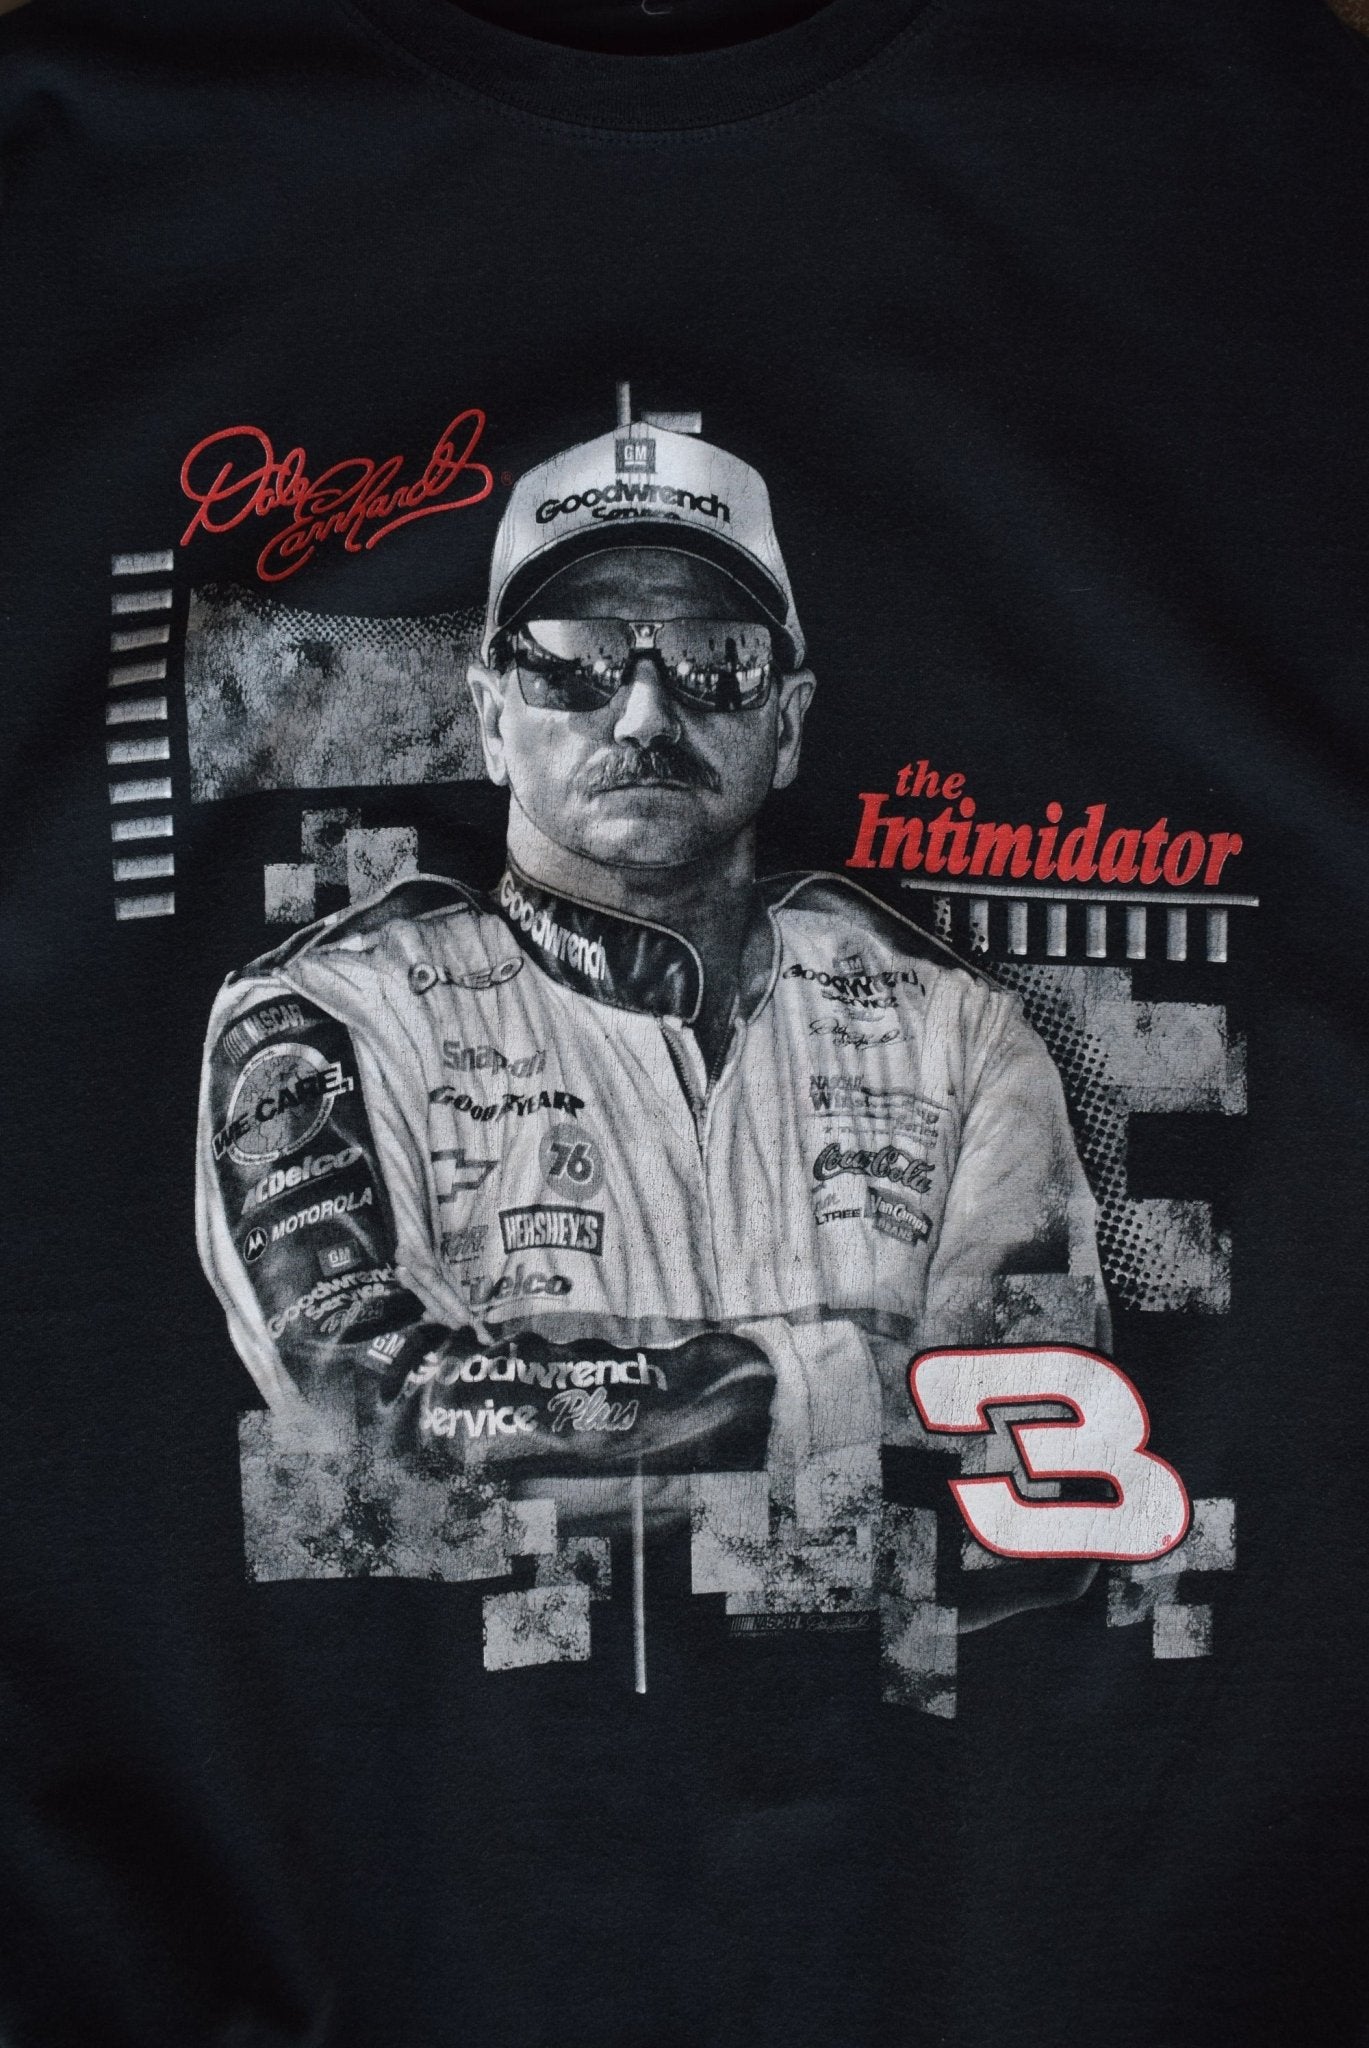 Vintage NASCAR x Dale Earnhardt 'The Intimidator' Tee (XXL) - Retrospective Store